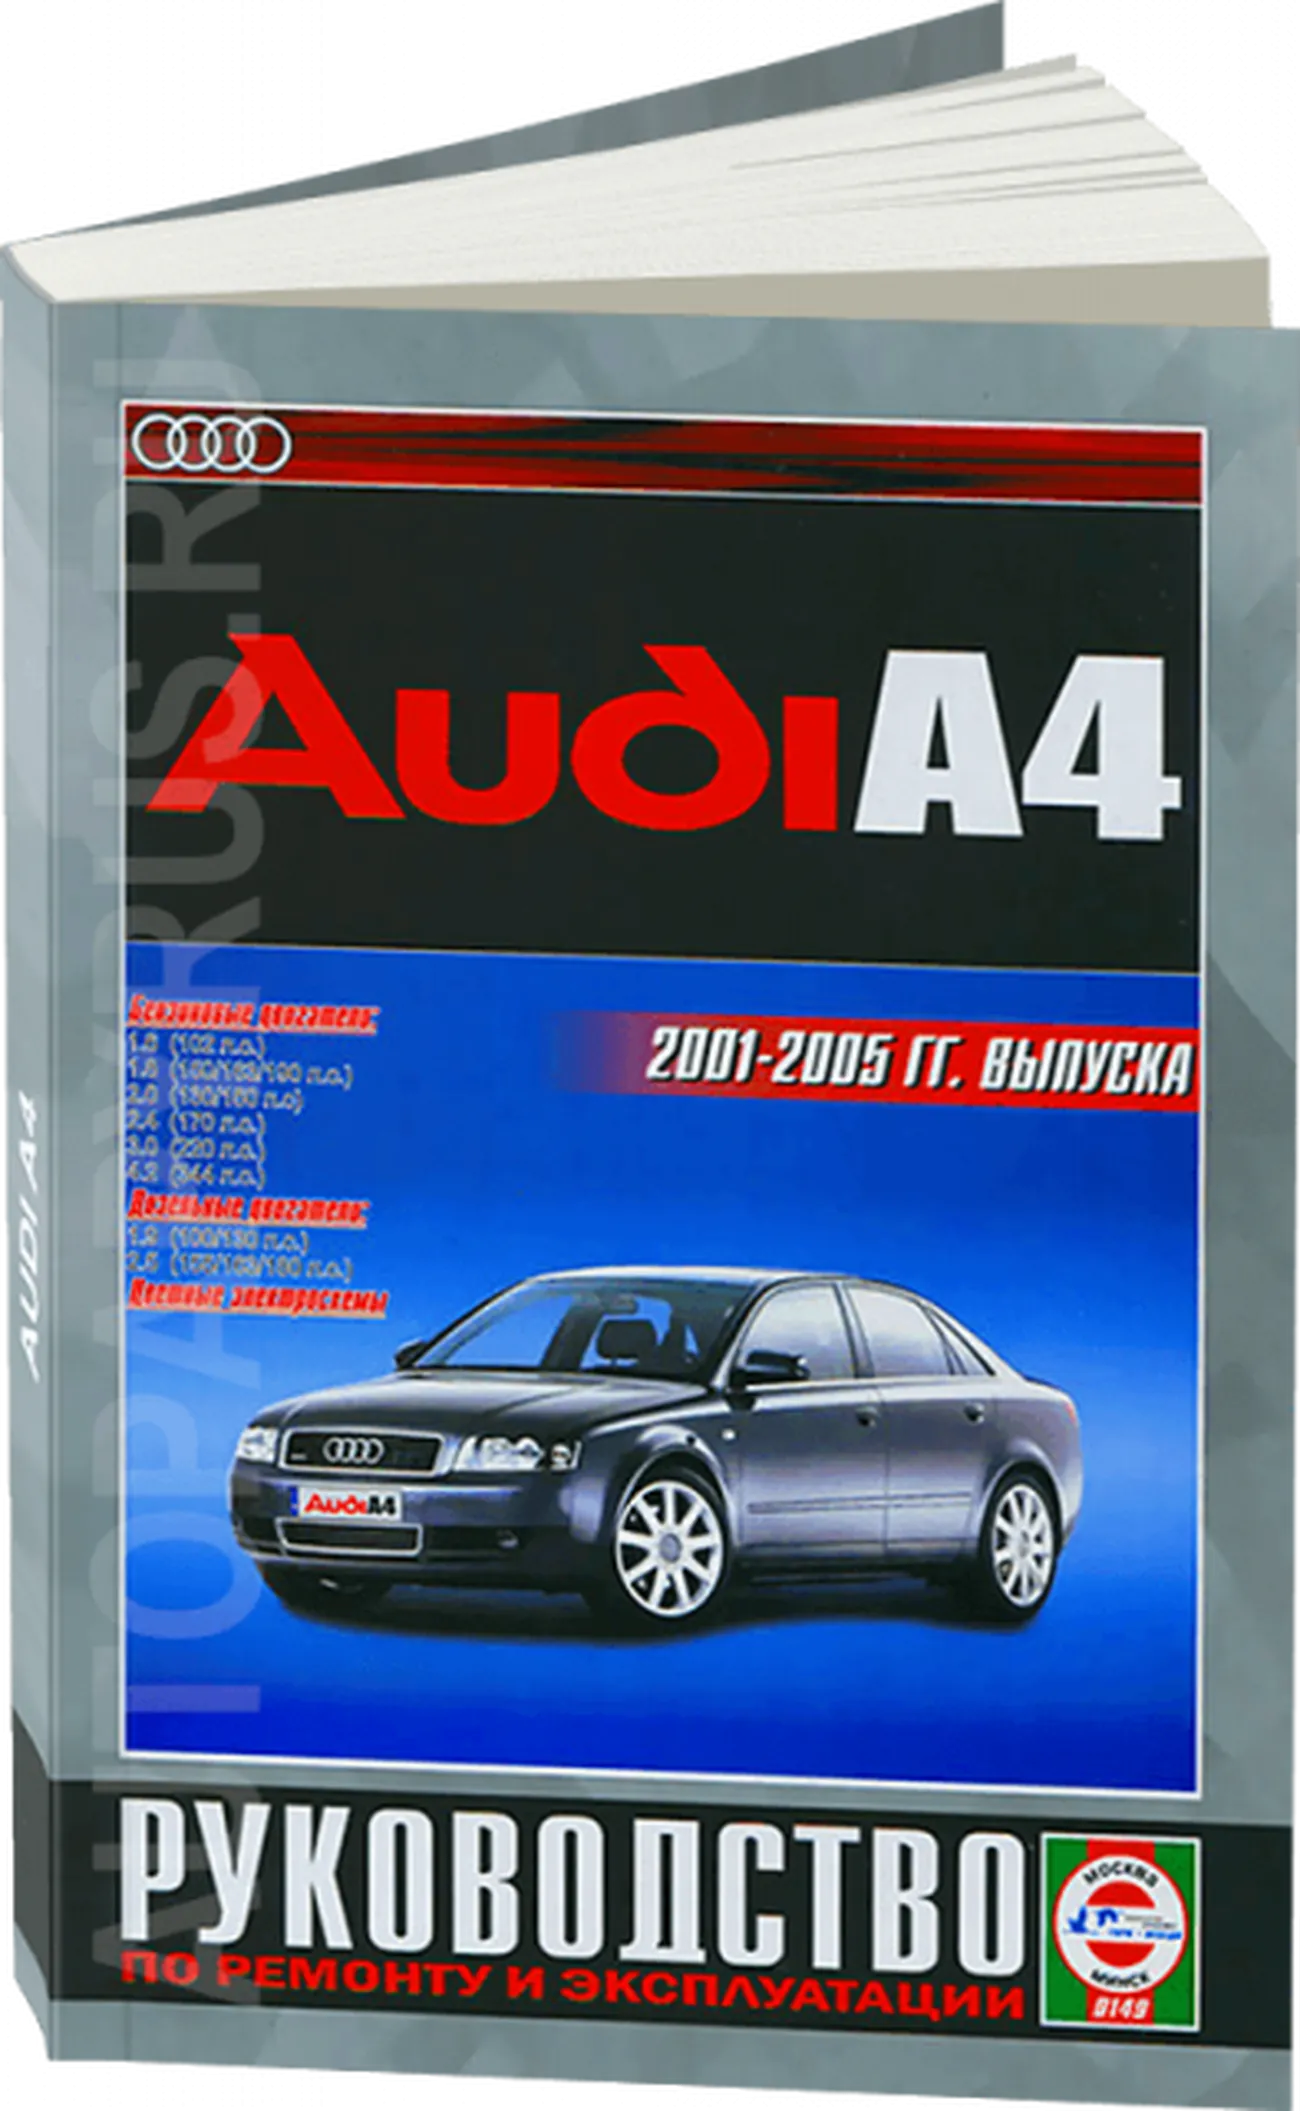 Книга: AUDI A4 (б , д) 2001-2005 г.в., рем., экспл., то | Чижовка